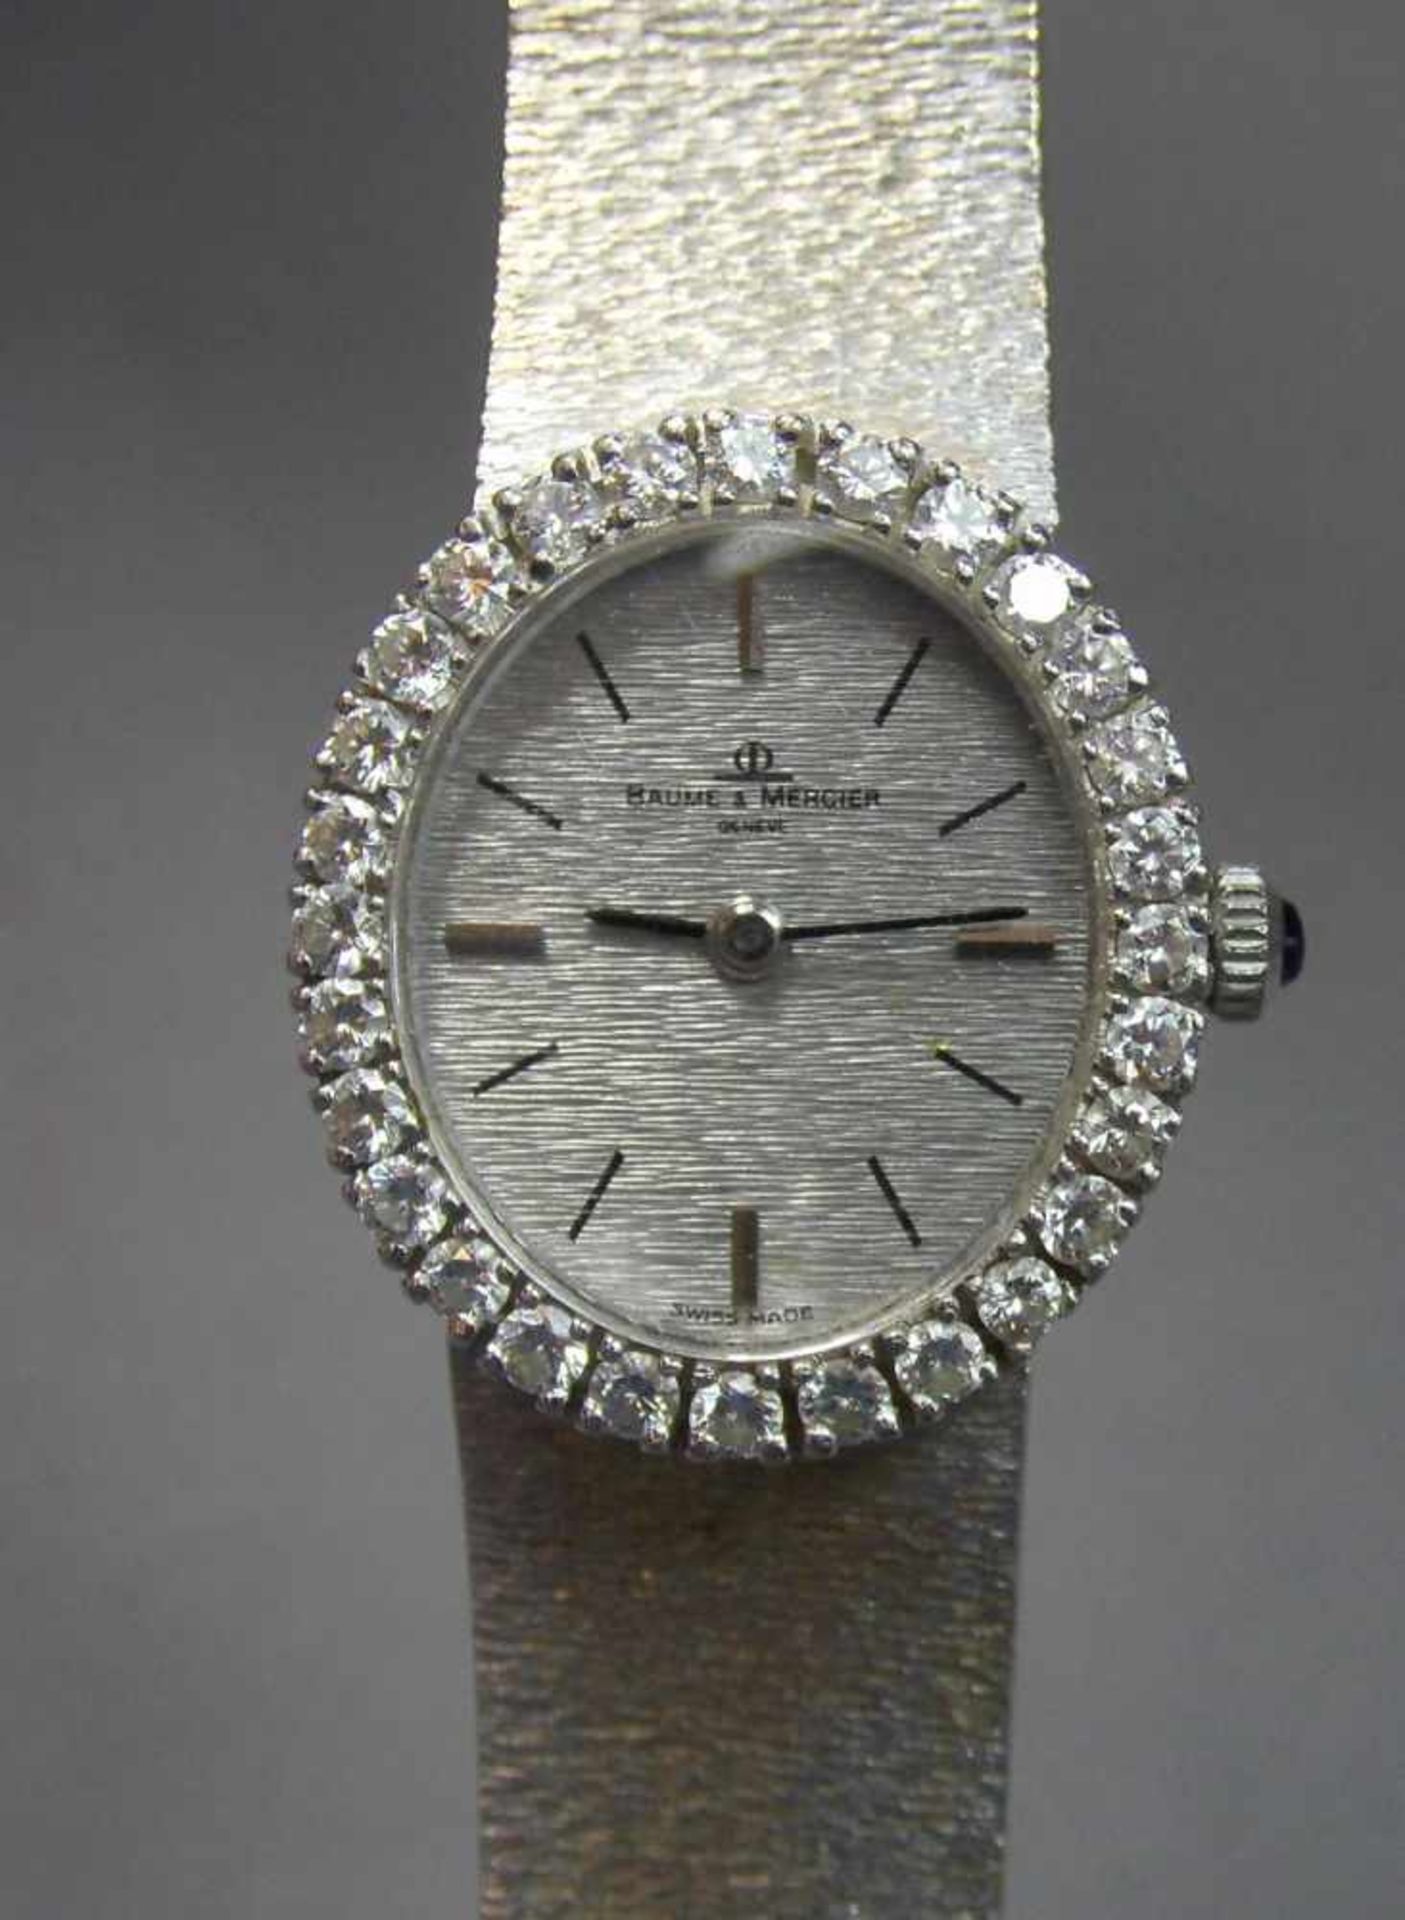 VINTAGE WEISSGOLD-ARMBANDUHR - BAUME & MERCIER GENEVE / wristwatch, Handaufzug, Manufaktur Baume & - Image 2 of 11